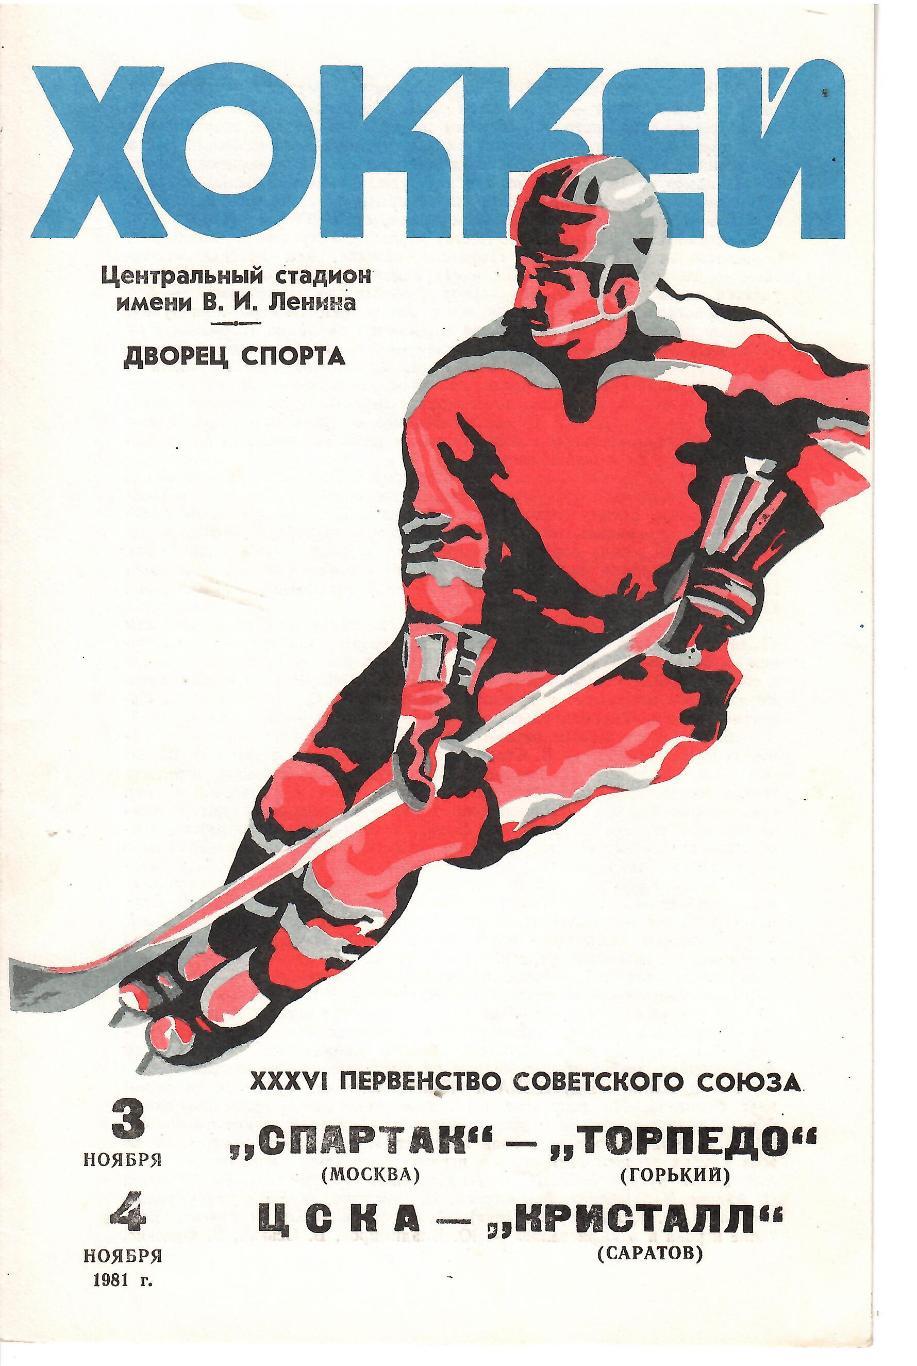 1981 Хоккей Спартак Москва - Торпедо - ЦСКА - Кристалл